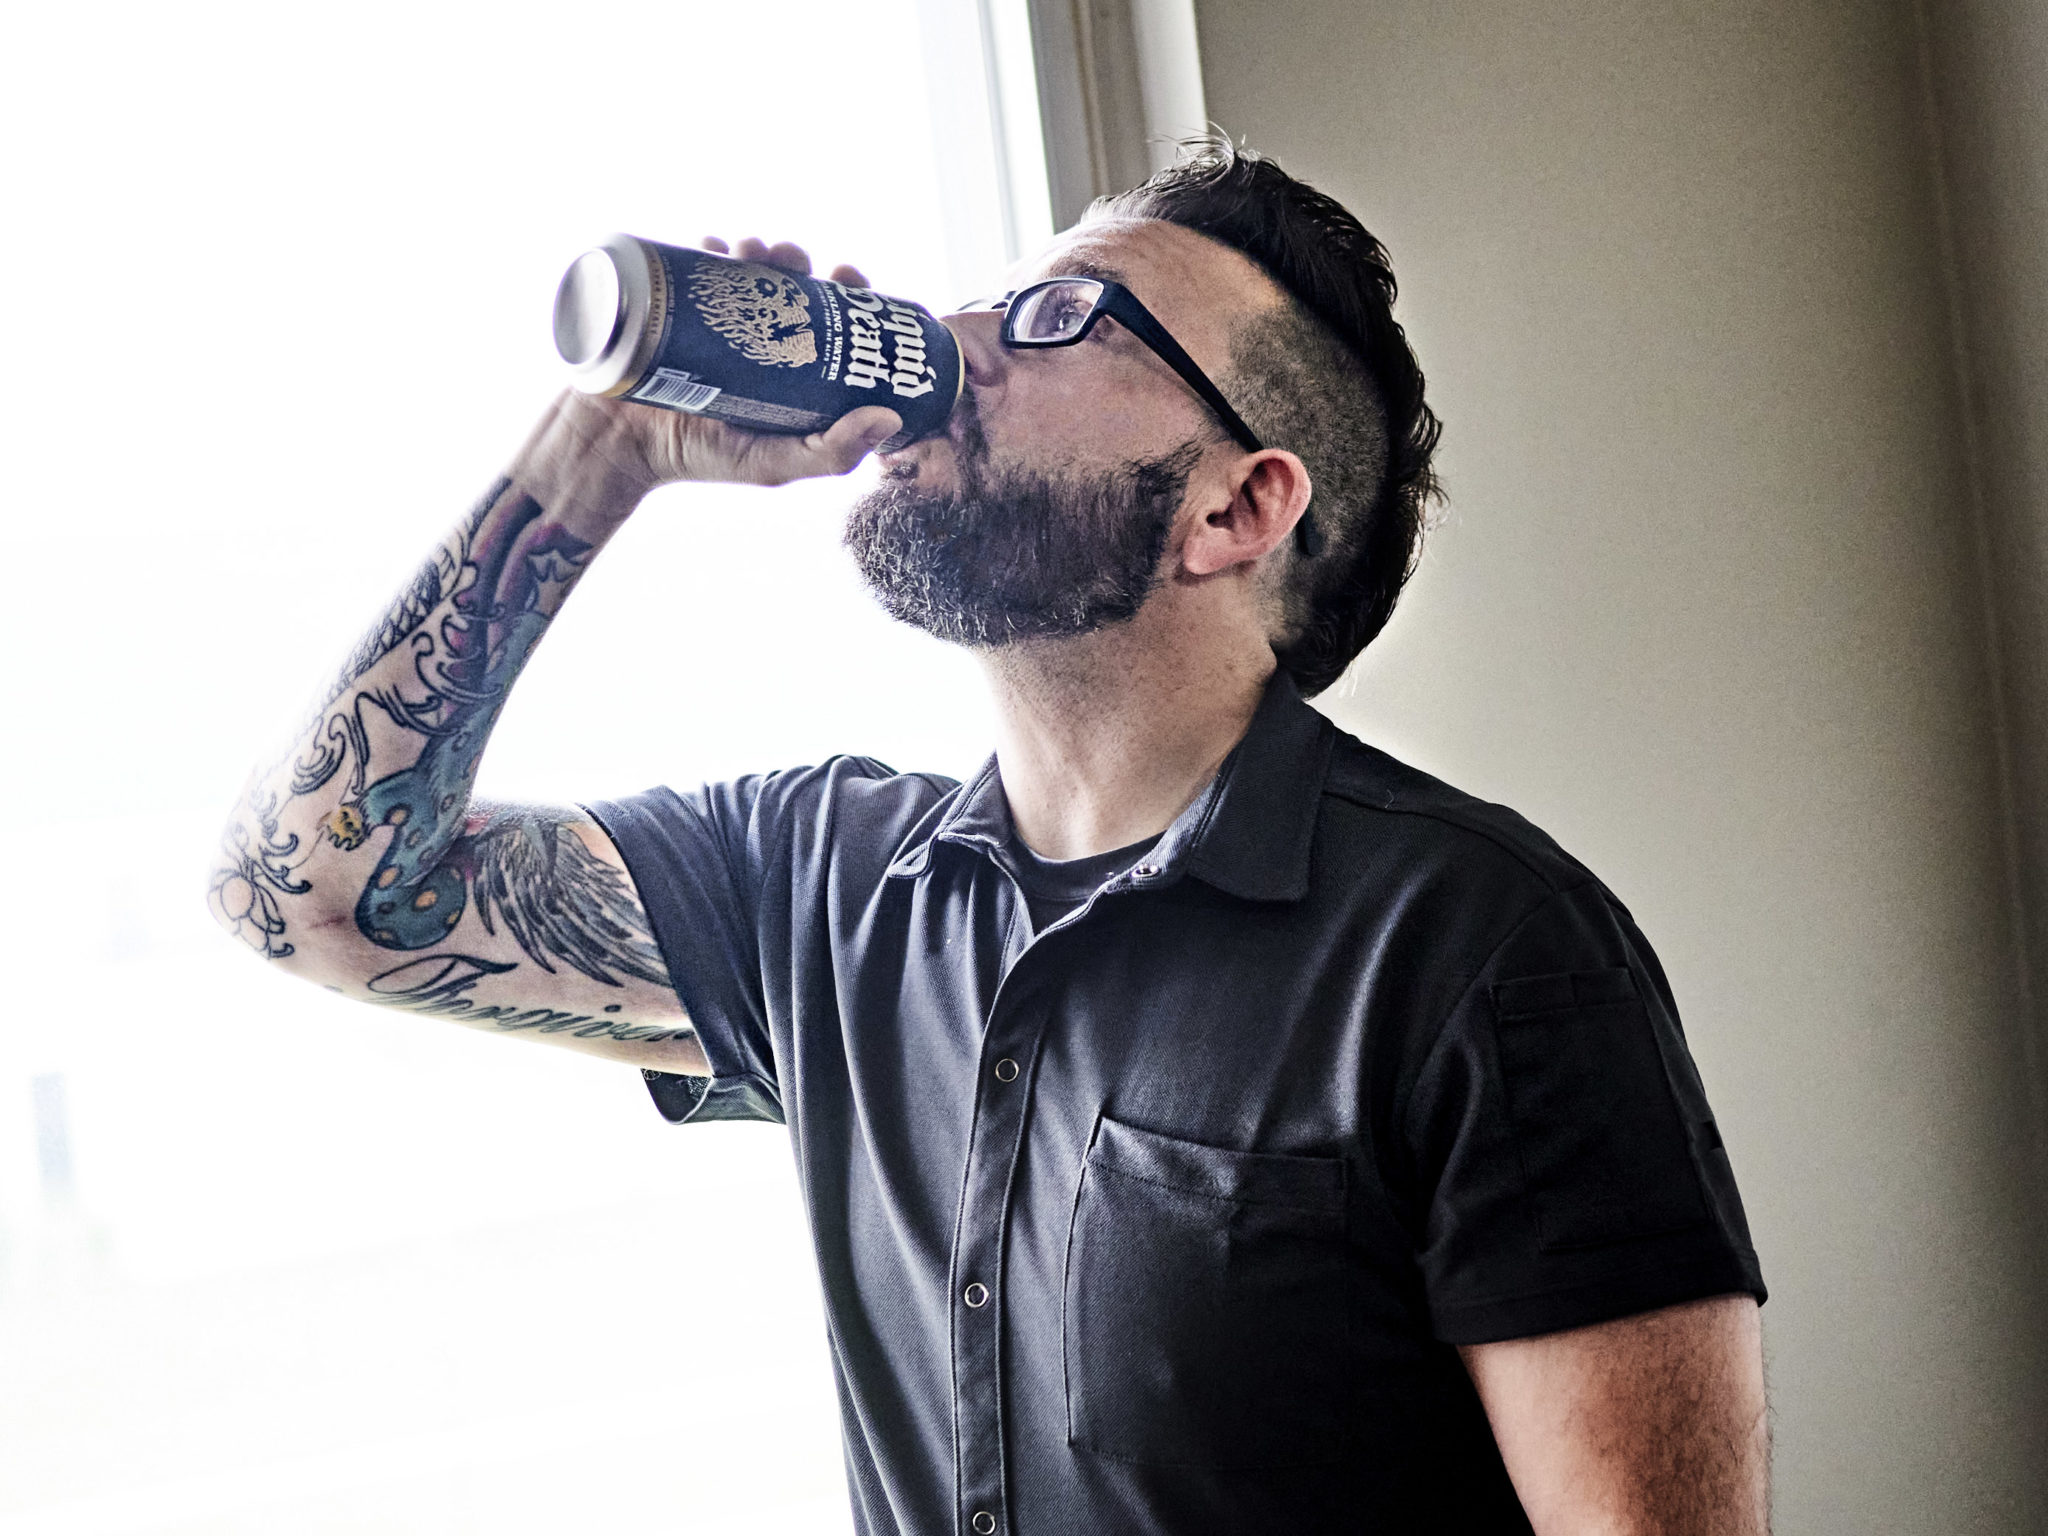 Max Schikora drinks a can of Liquid Death.